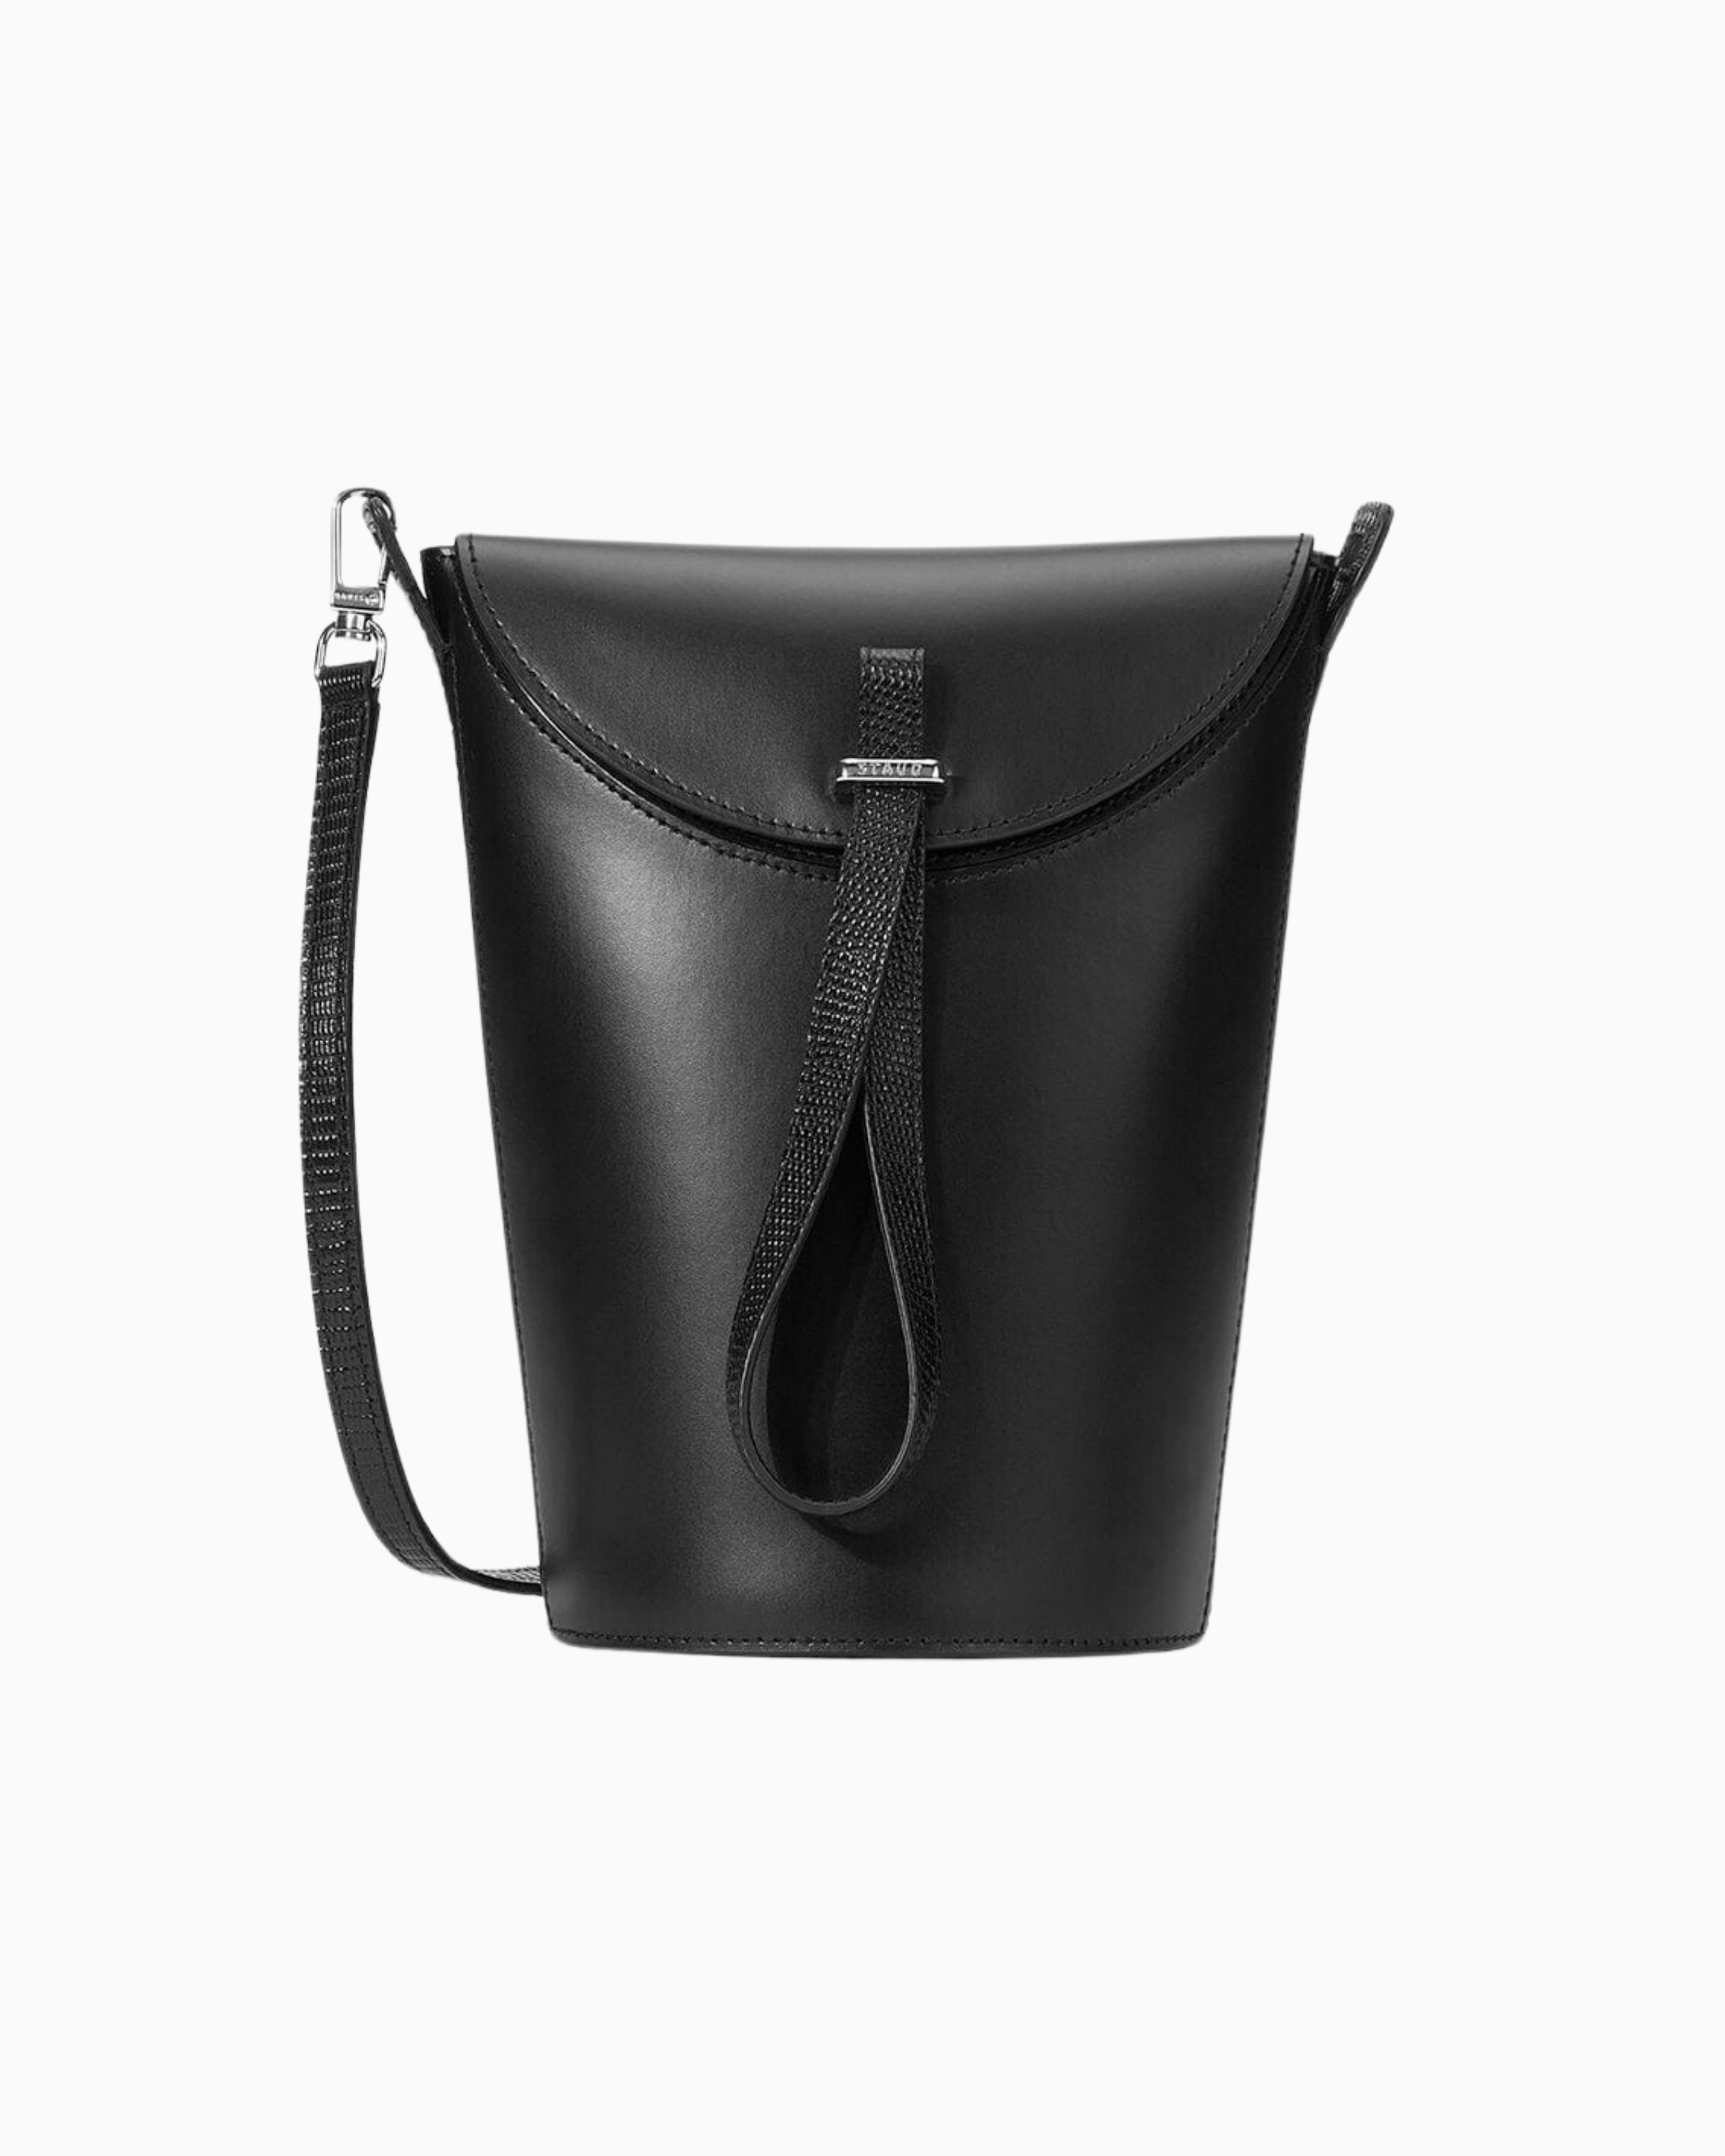 Staud Convertible Phoebe Bucket Bag in Black